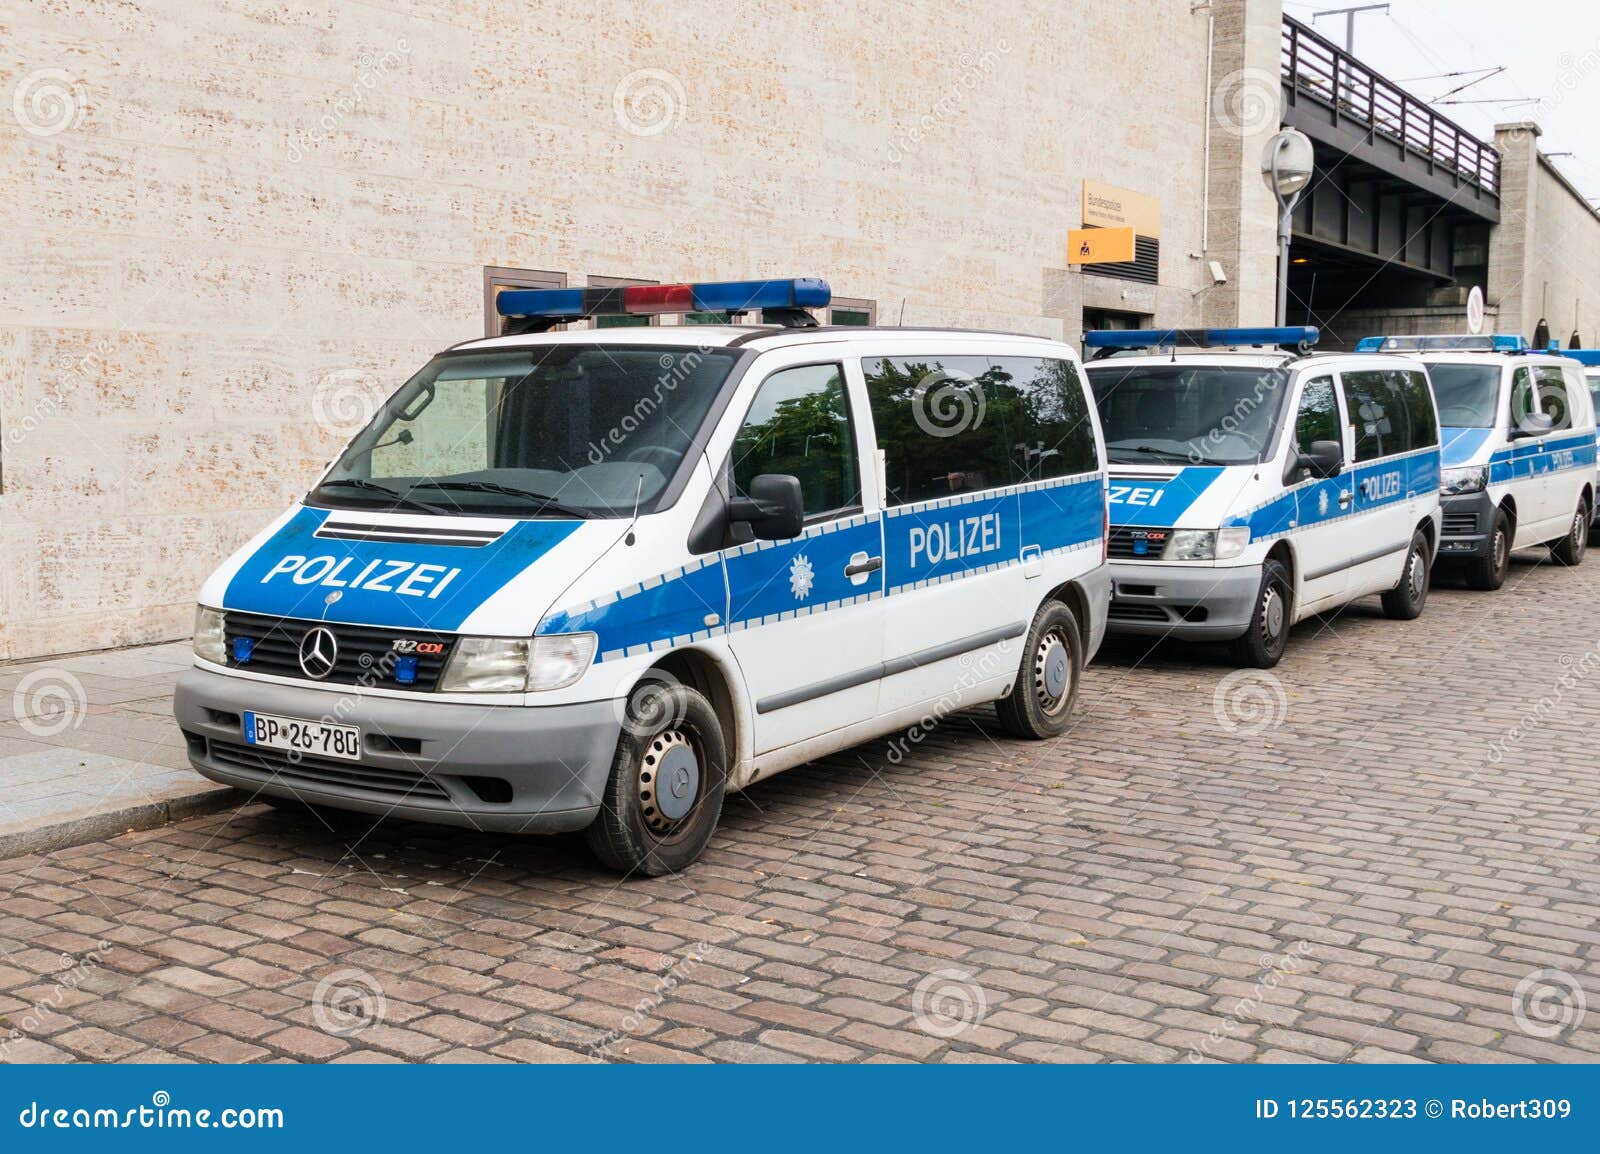 https://thumbs.dreamstime.com/z/berlin-germany-august-german-polizei-car-polizei-german-word-police-german-polizei-car-polizei-german-word-125562323.jpg